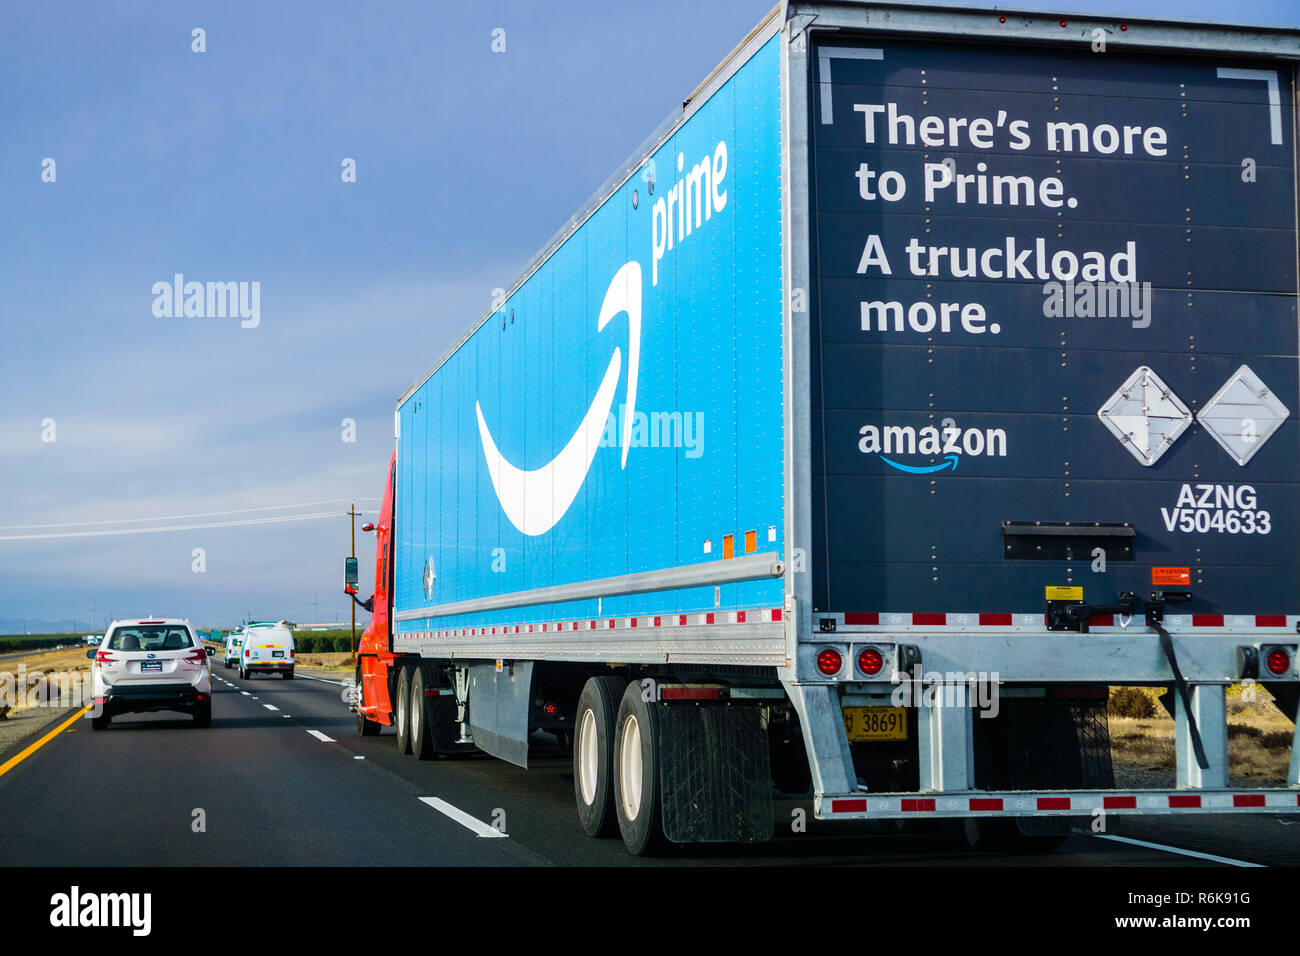 Amazon Prime Shipping Immagini e Fotos Stock - Alamy